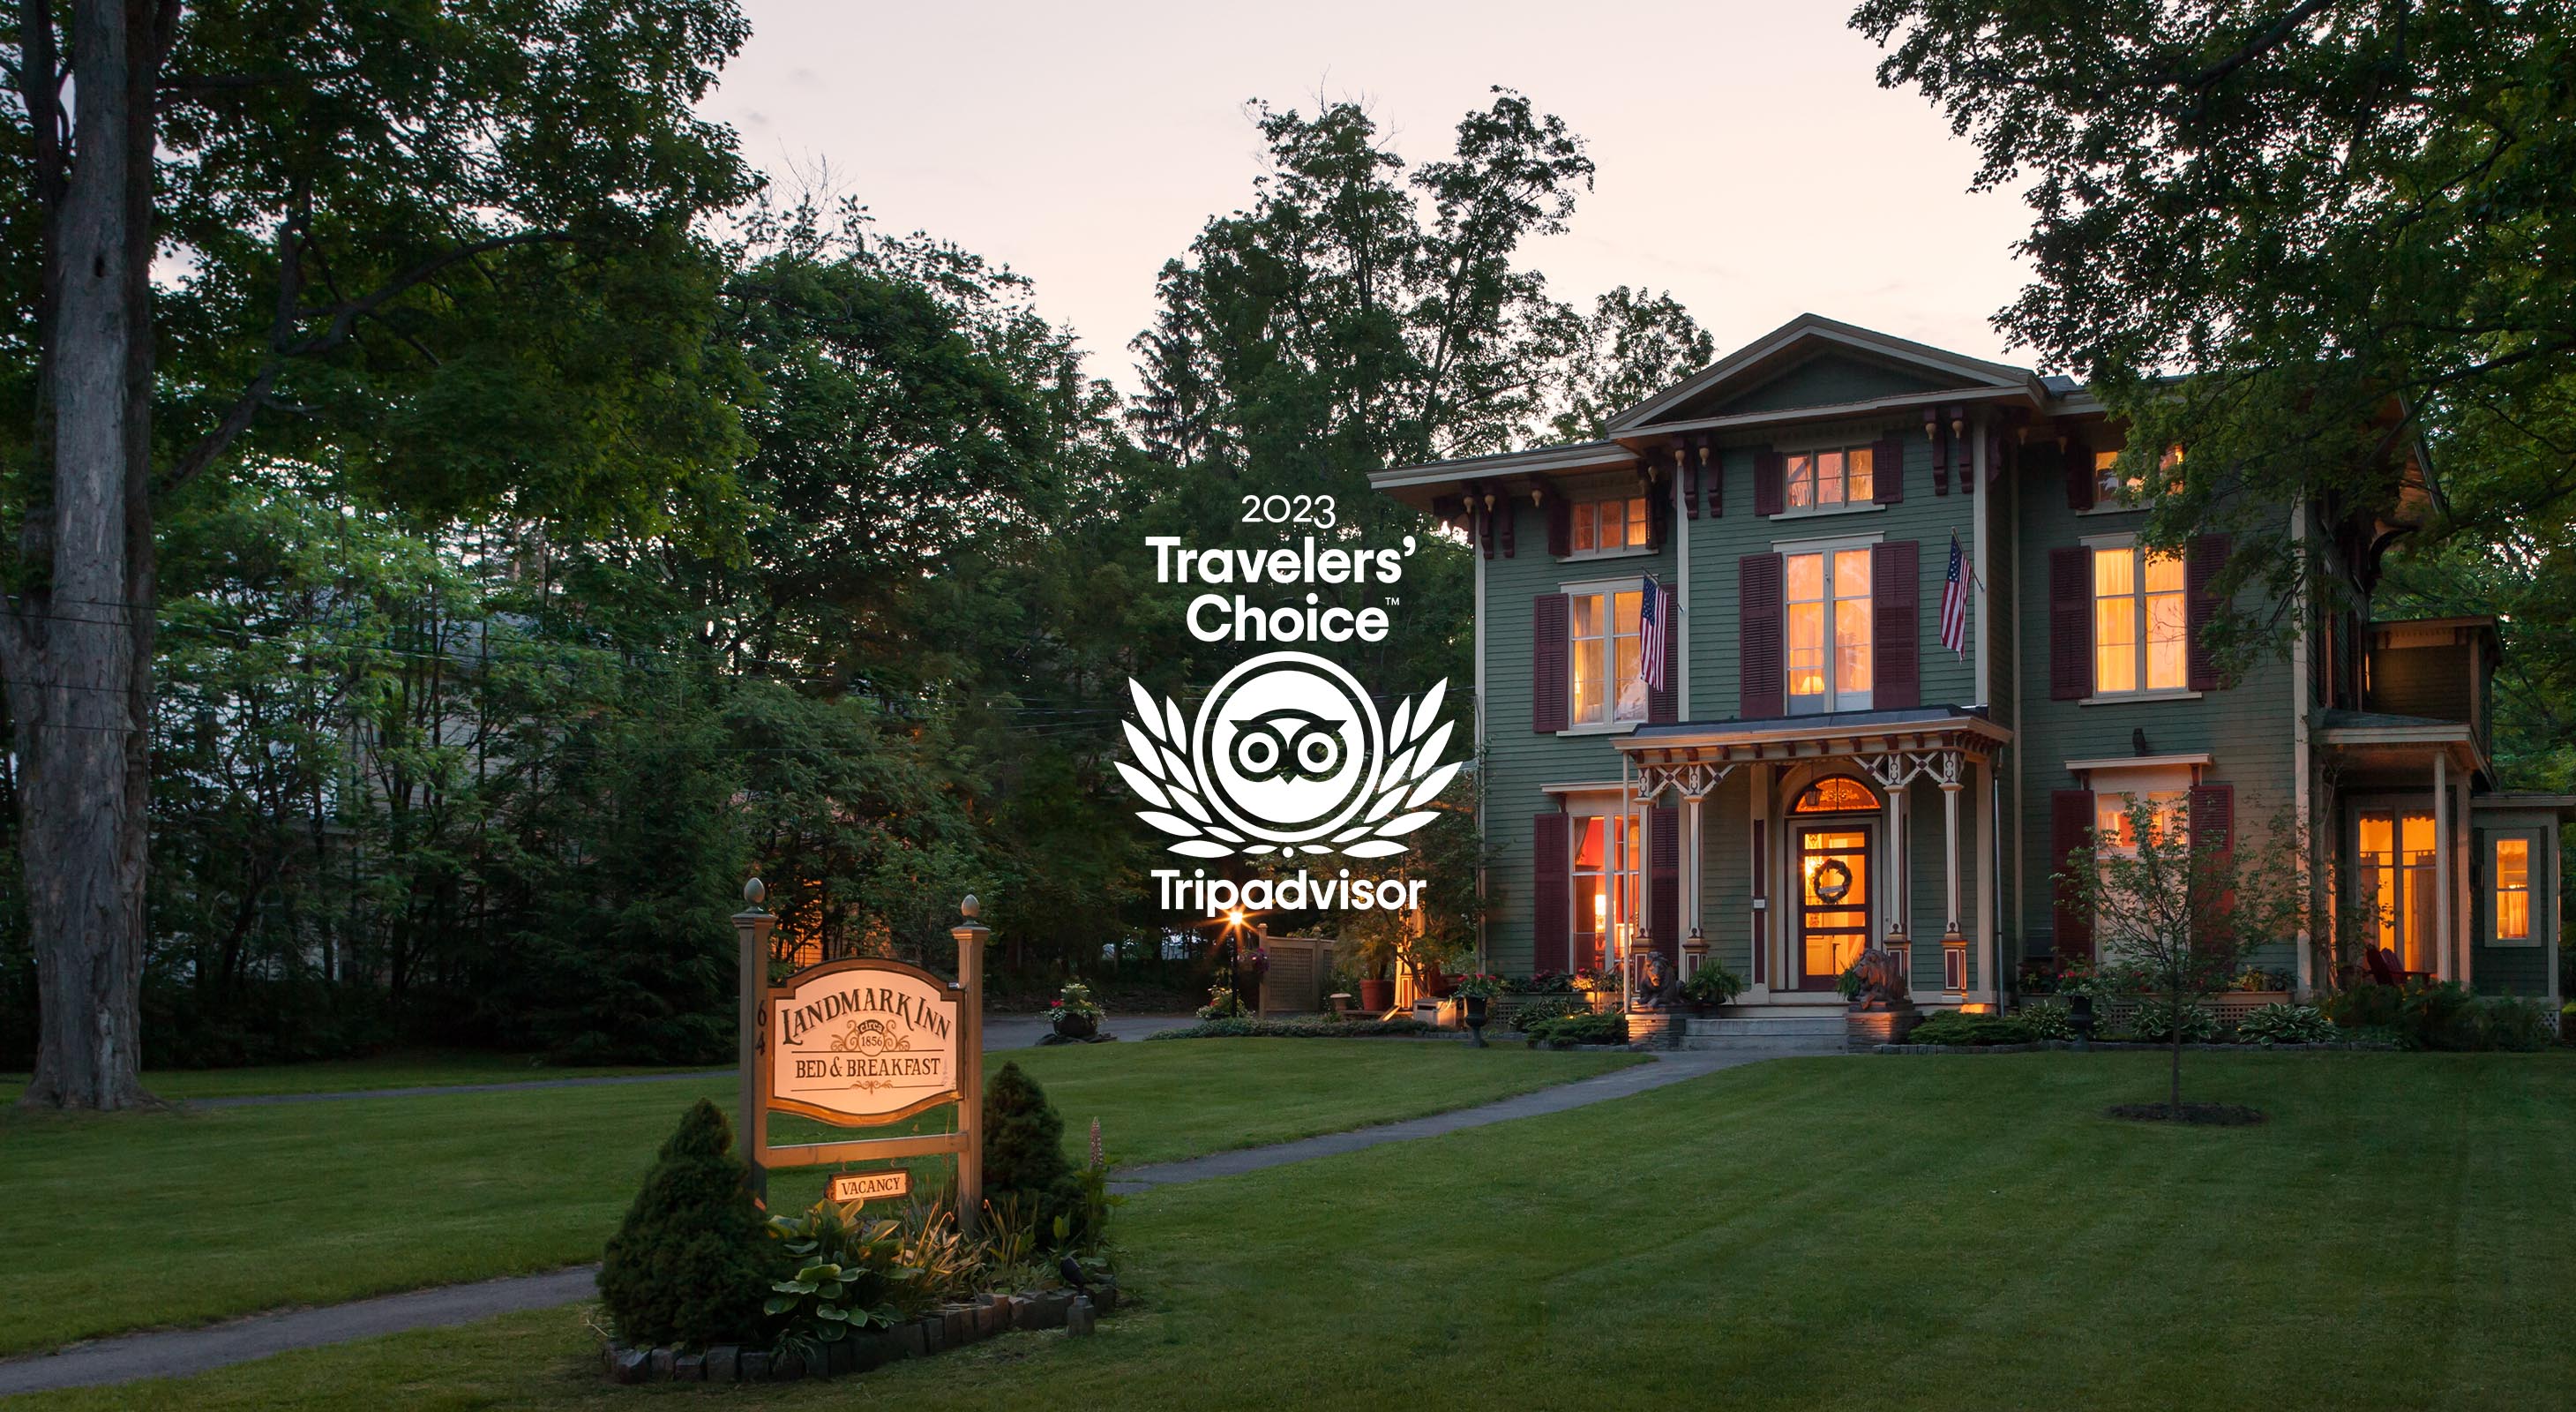 Exterior of inn at dusk with 2020 Travelers Choice logo from TripAdvisor